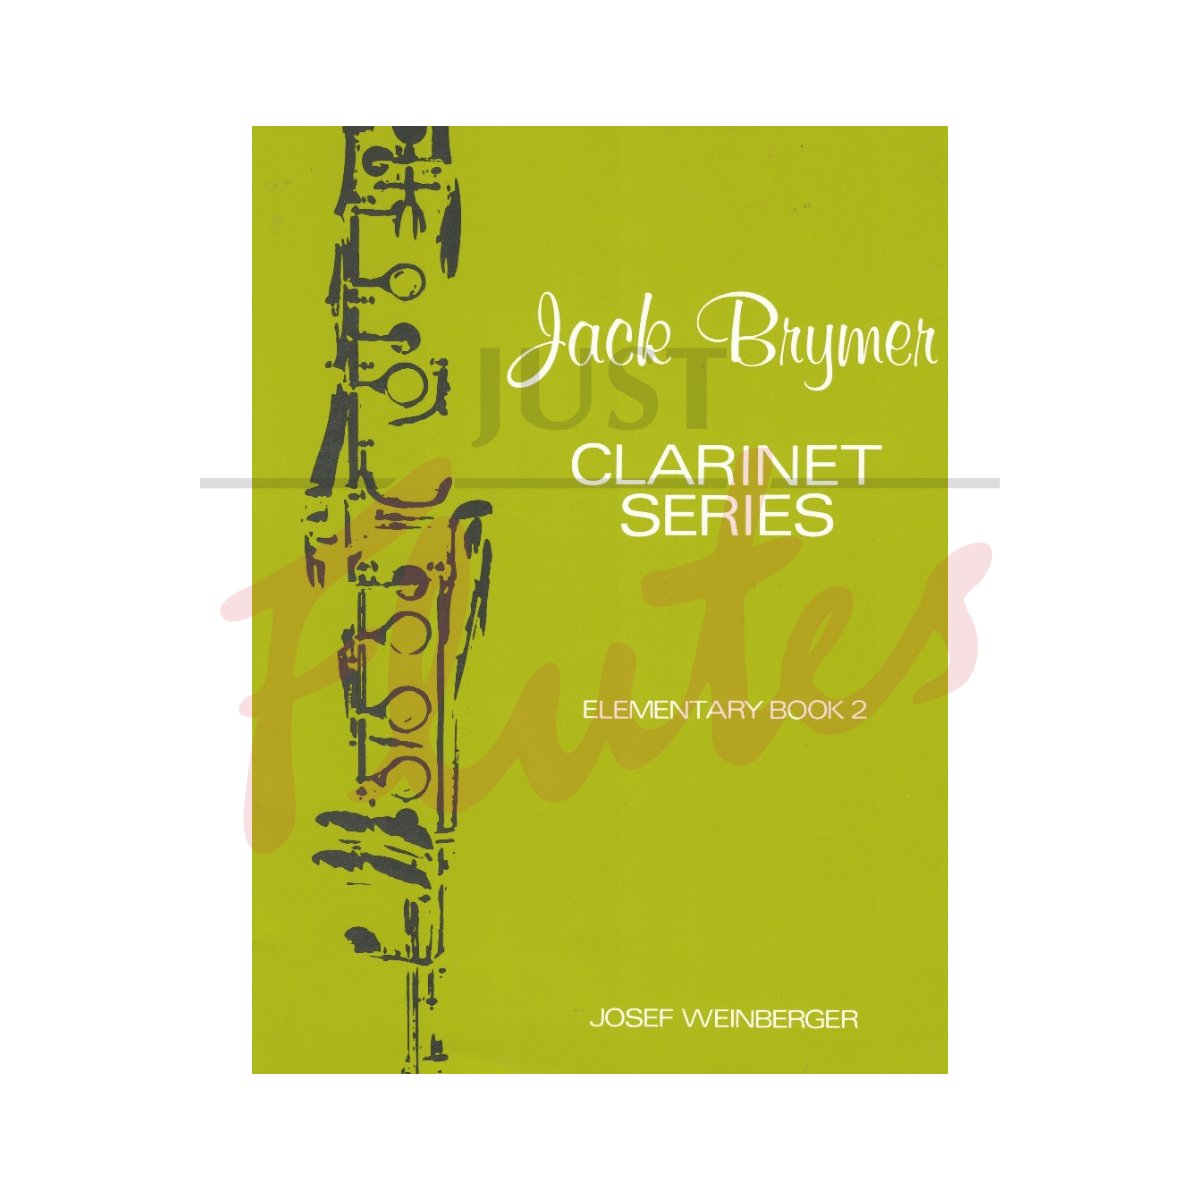 Clarinet Series Elementary Book 2